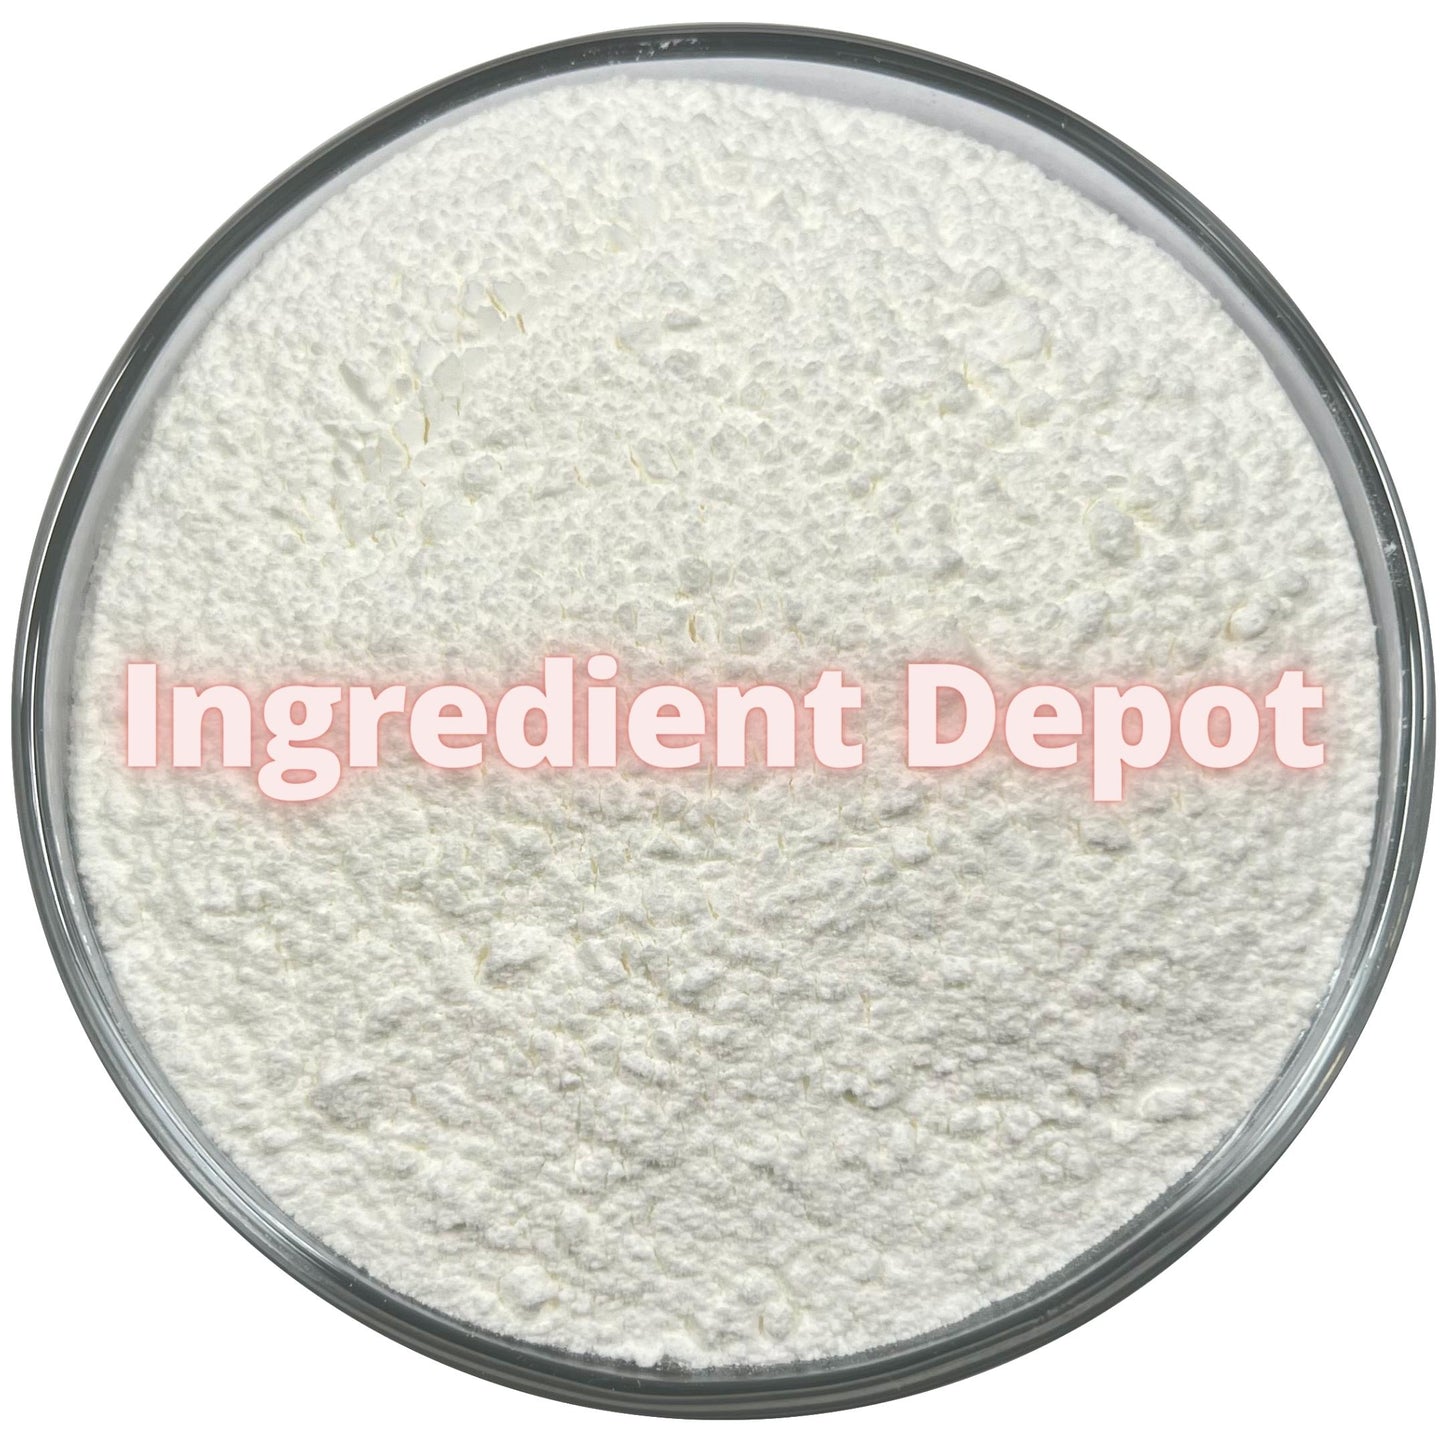 Lactose Super, Low pH, Food Grade 1 kg - IngredientDepot.com